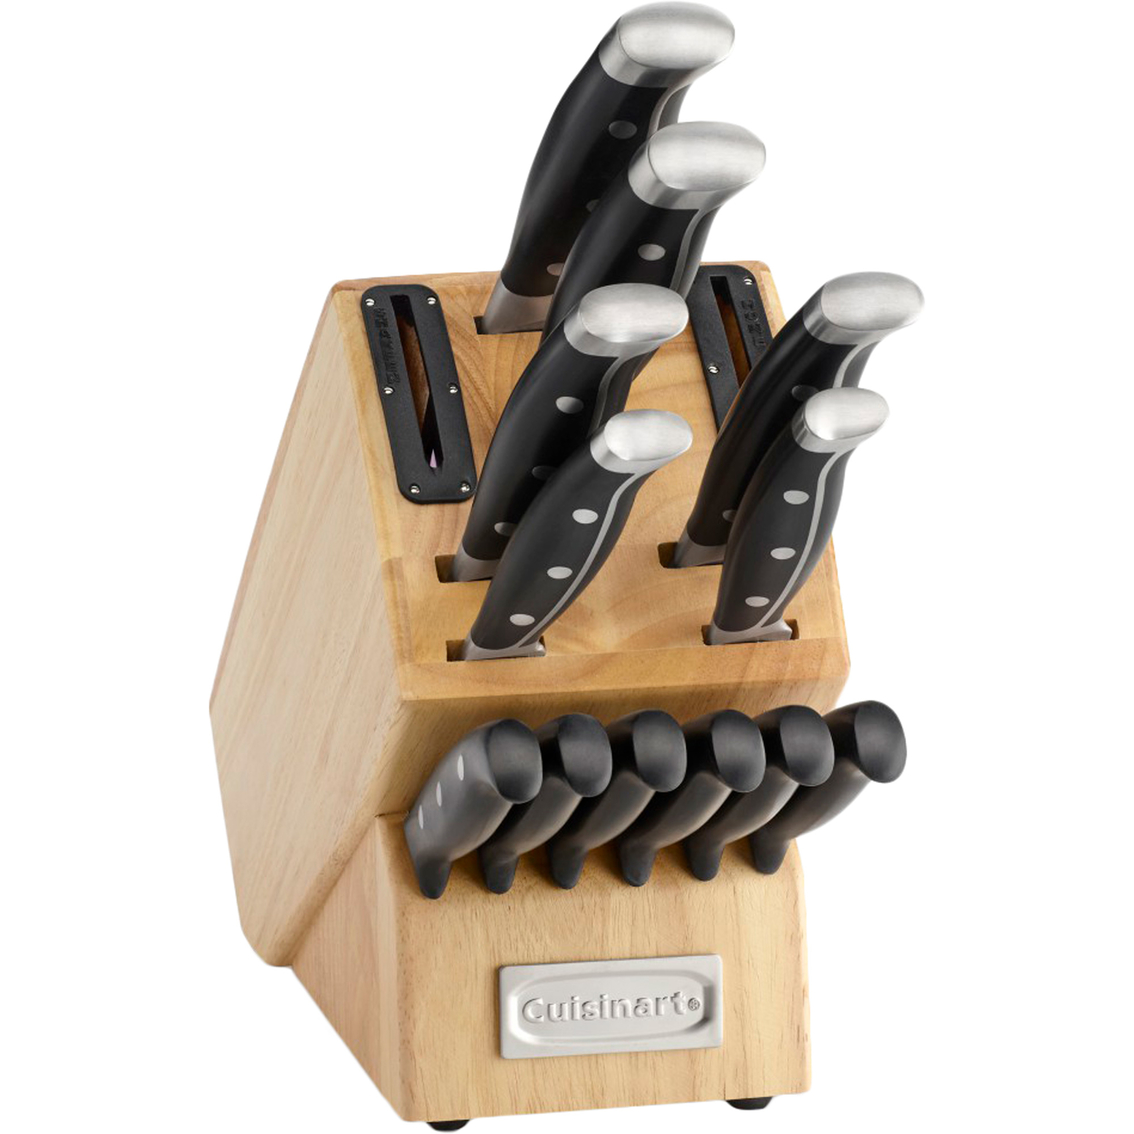 Cuisinart Triple Rivet 15-Piece Knife Block Set + Reviews